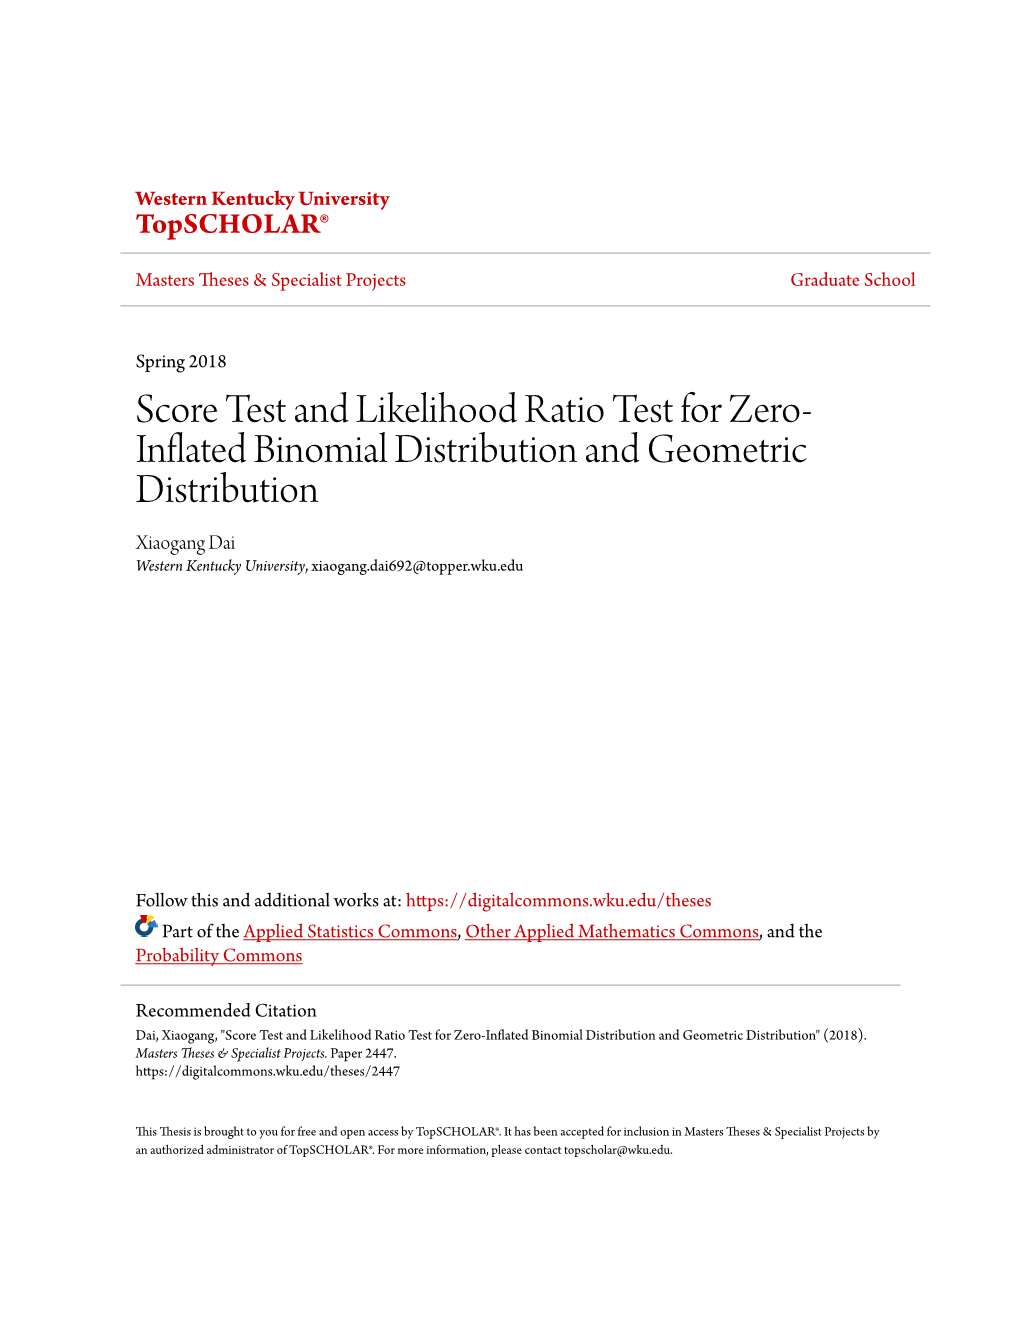 Score Test and Likelihood Ratio Test for Zero-Inflated Binomial Distribution and Geometric Distribution" (2018)